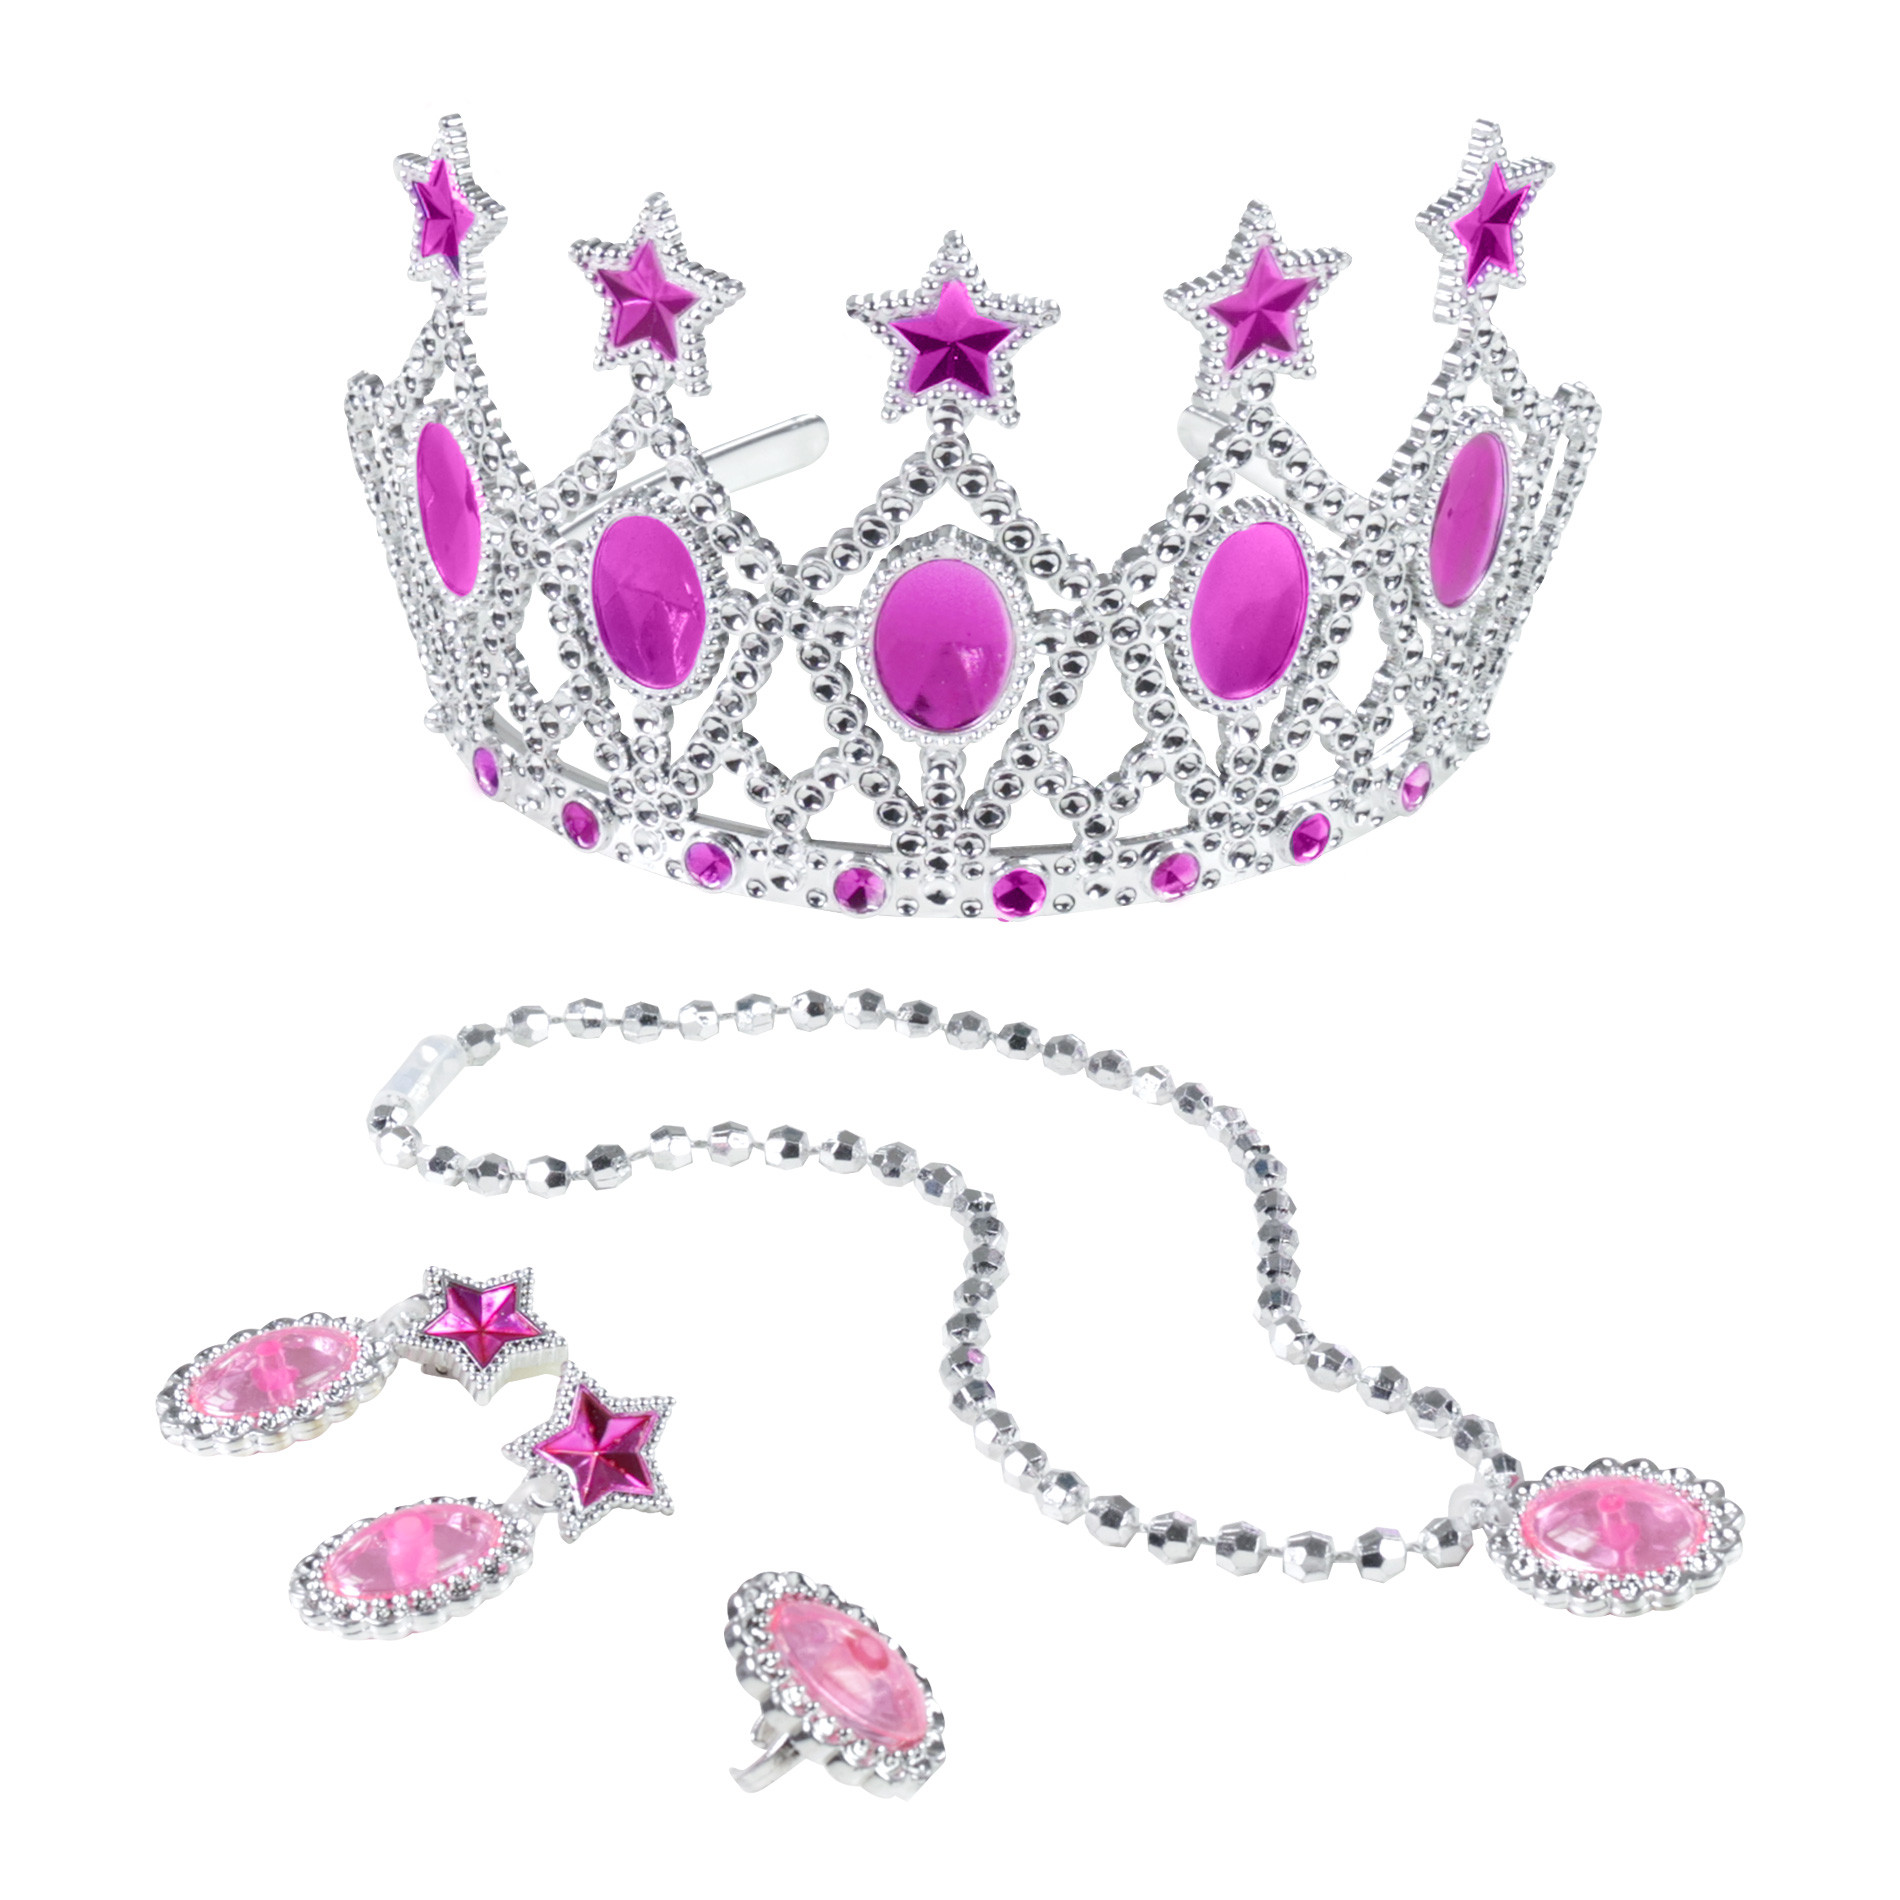 Princess crown earrings necklace pink